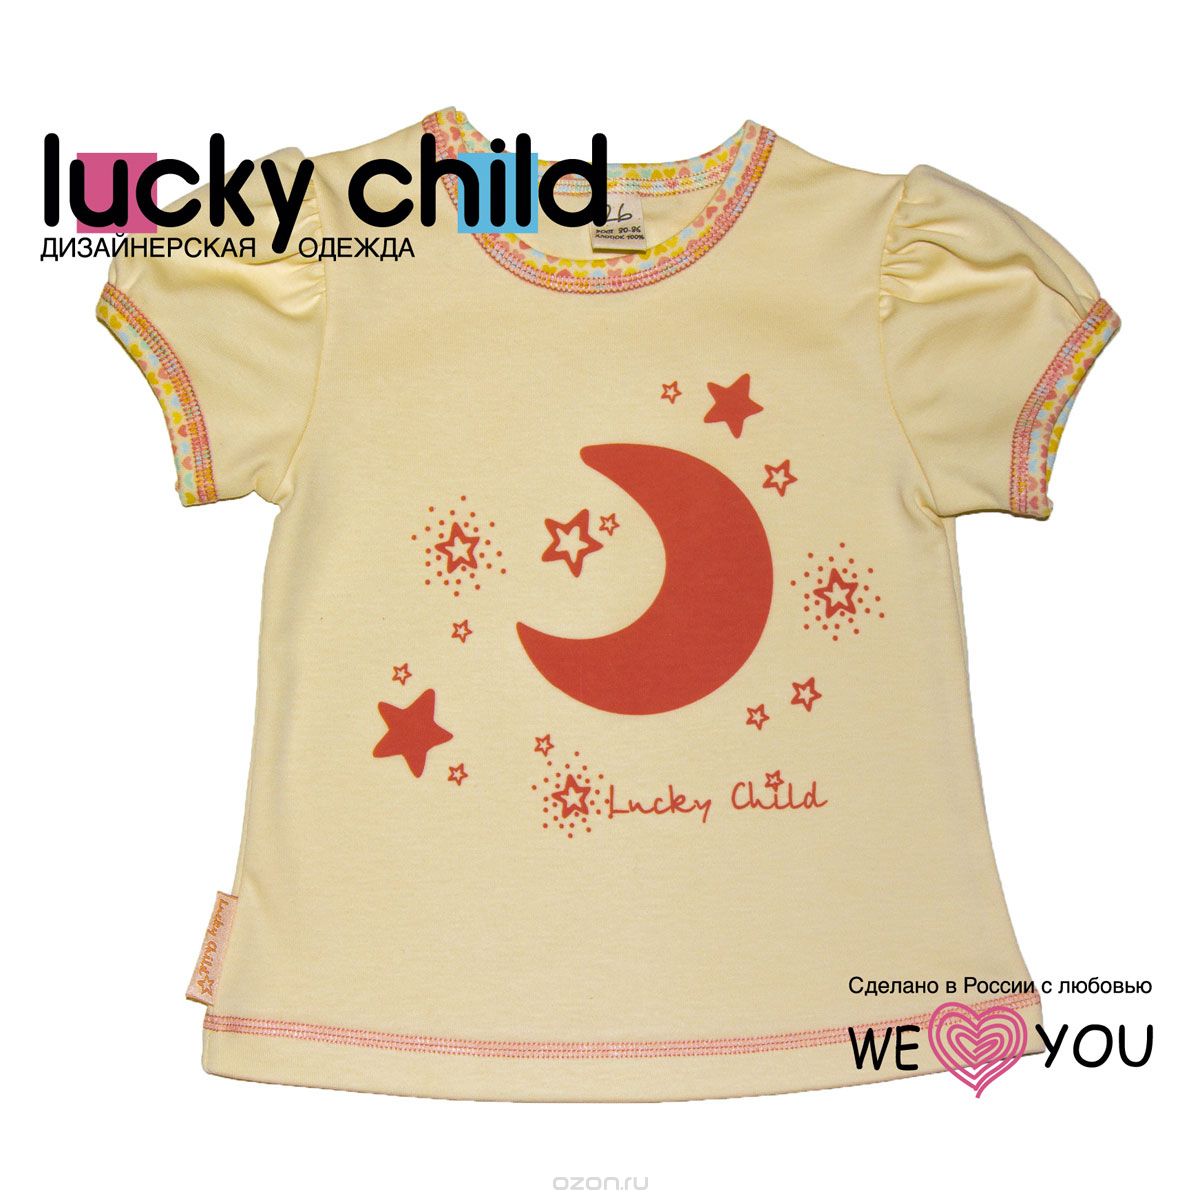    Lucky Child, : , , . 12-402.  92/98